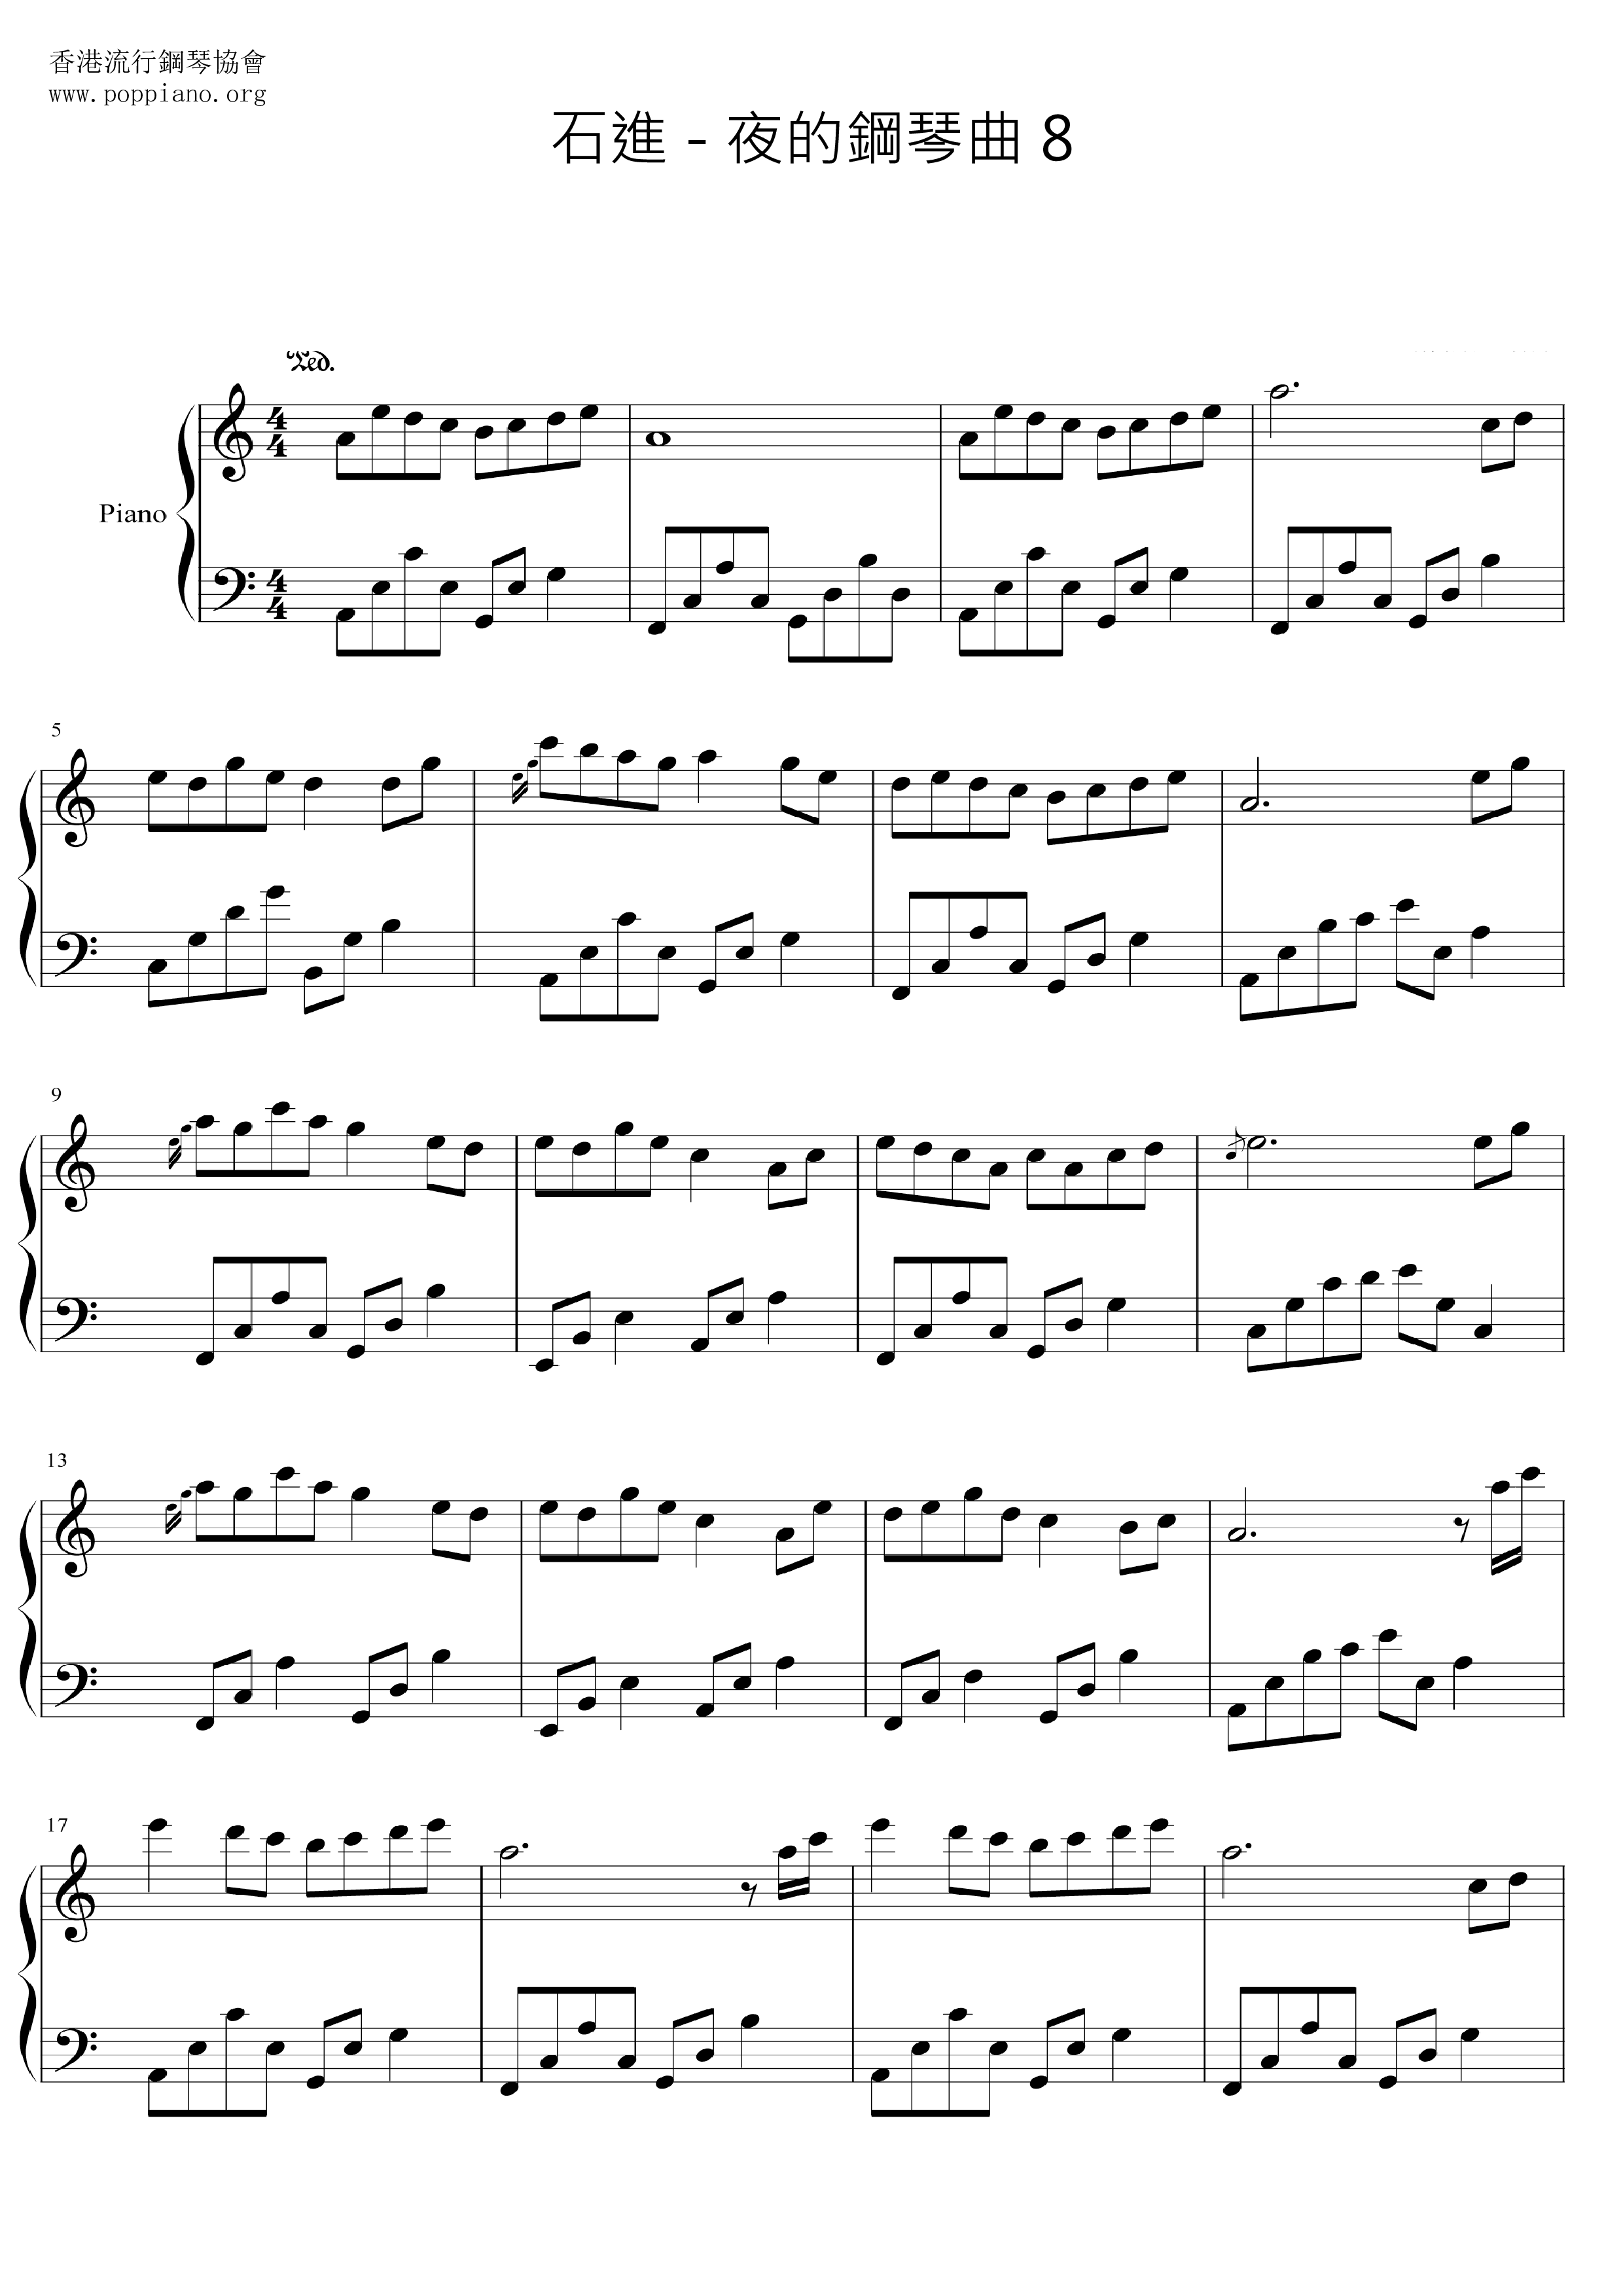 Melody Of The Night 8 Score